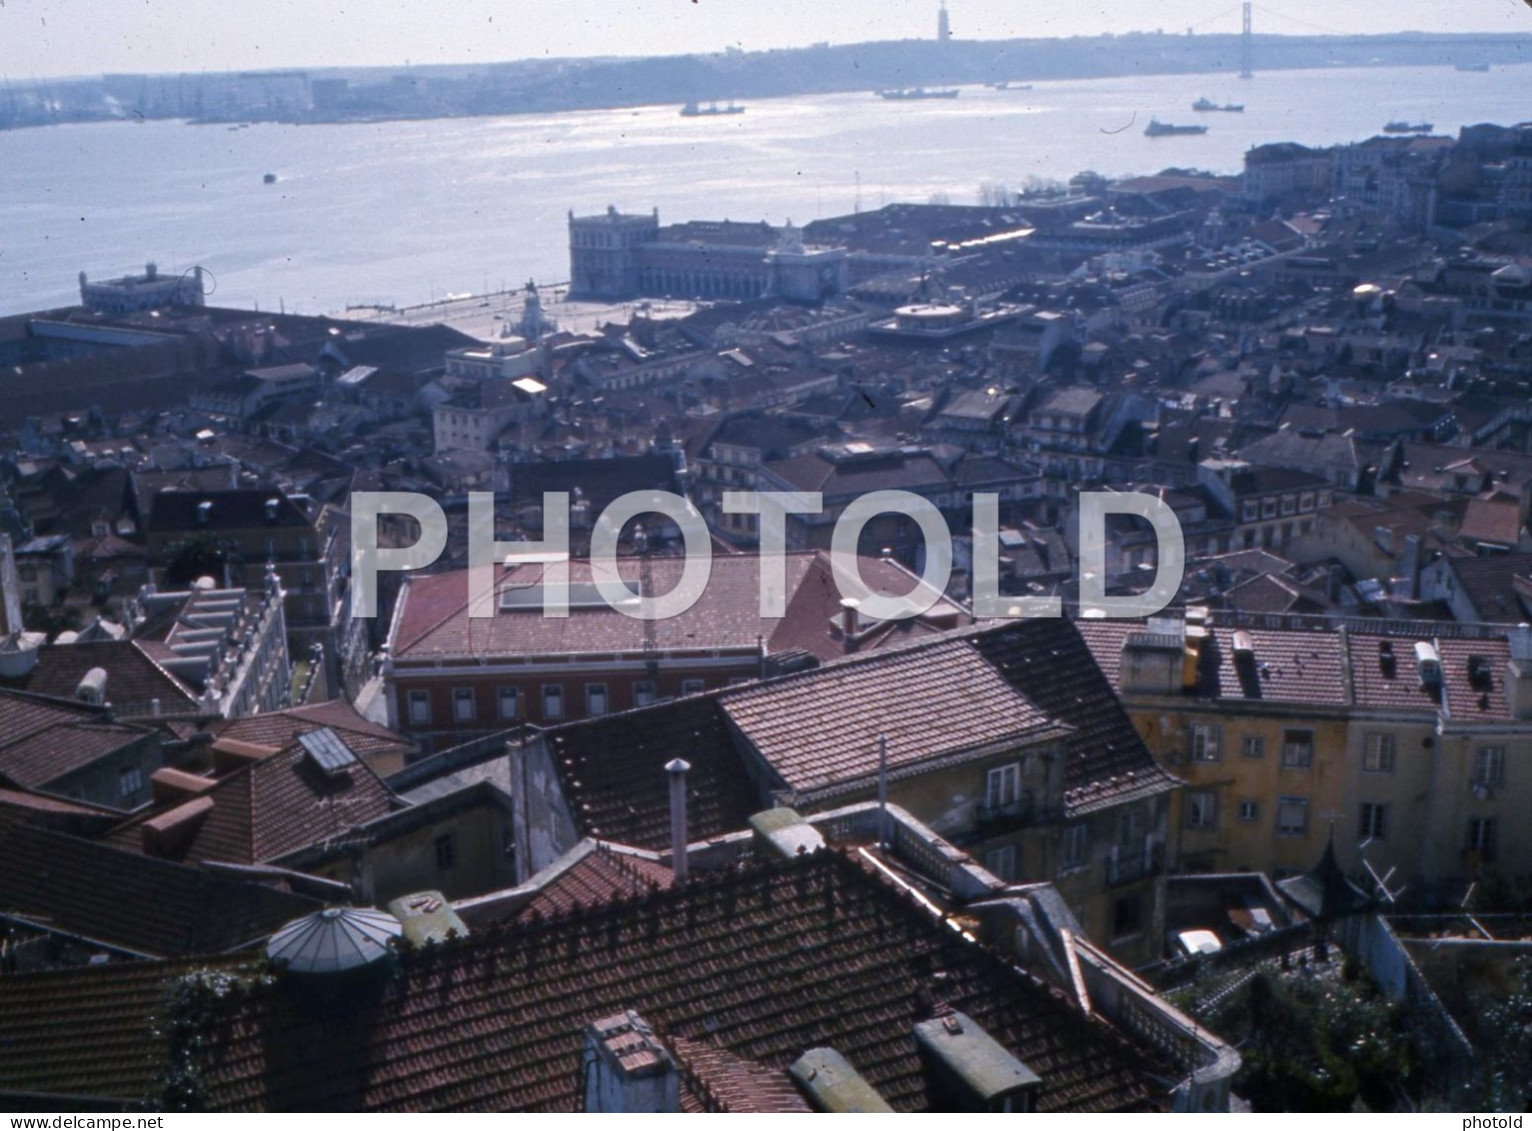 4 SLIDES SET 1984 LISBOA LISBON PORTUGAL 16mm DIAPOSITIVE SLIDE Not PHOTO No FOTO NB4047 - Diapositives